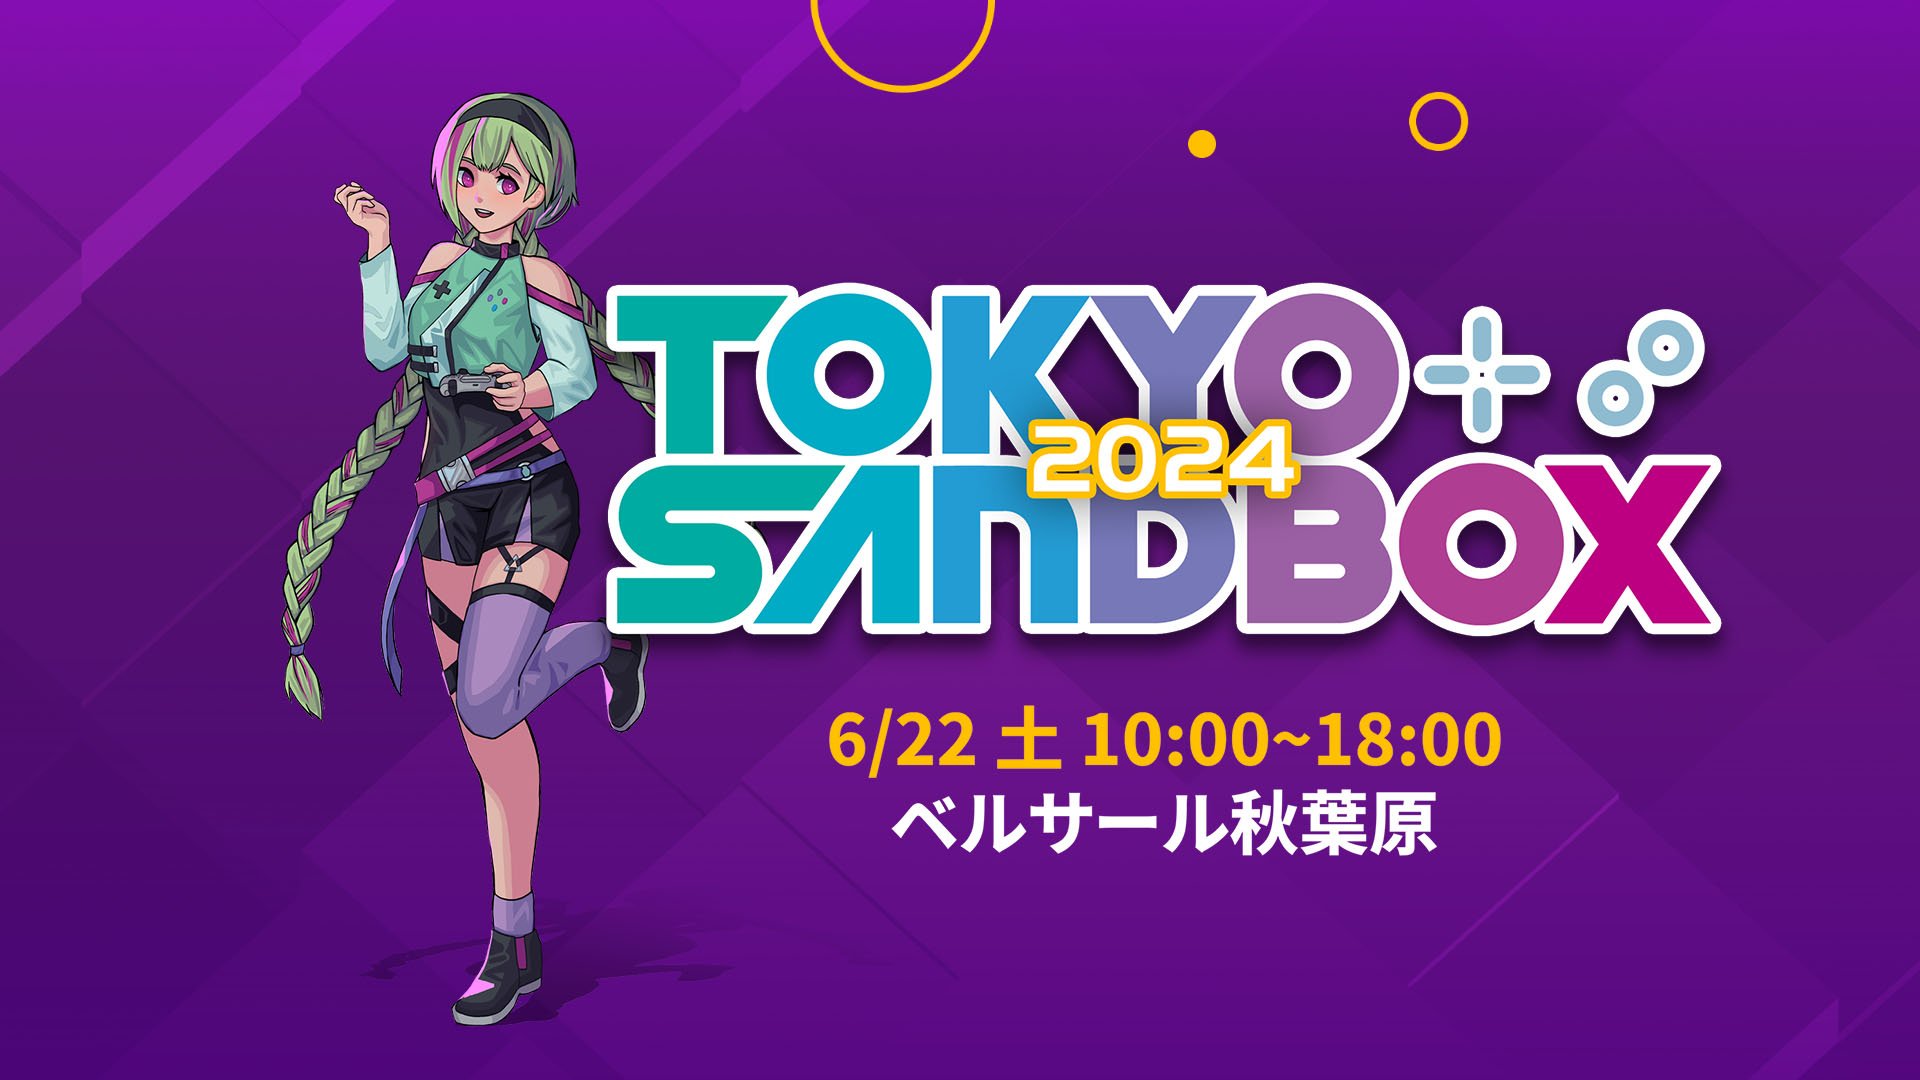 Tokyo Sandbox 2024